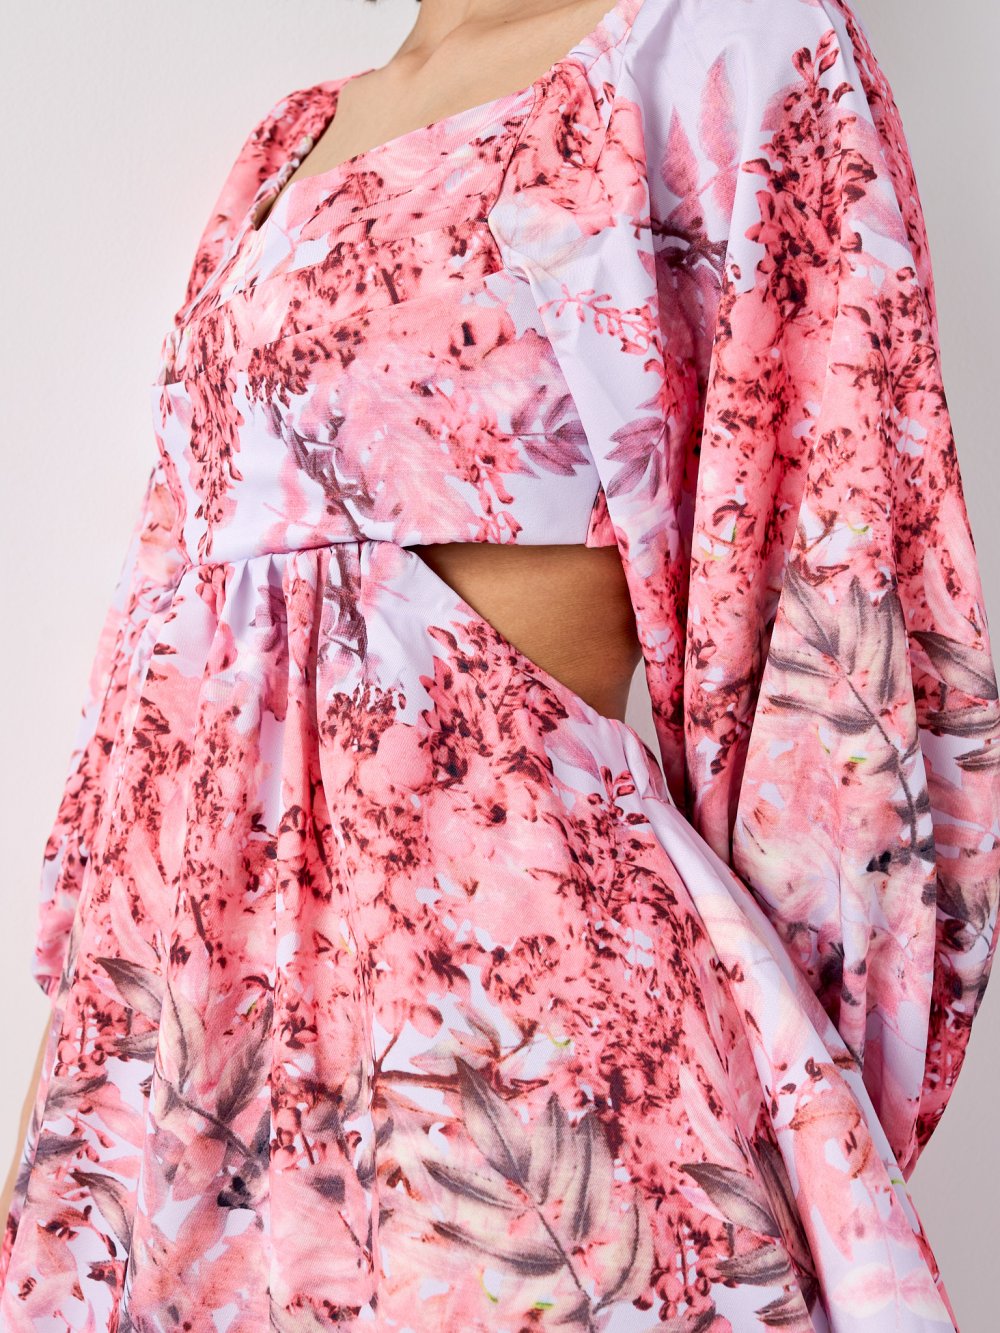 Fialovo-ružové šaty Findy